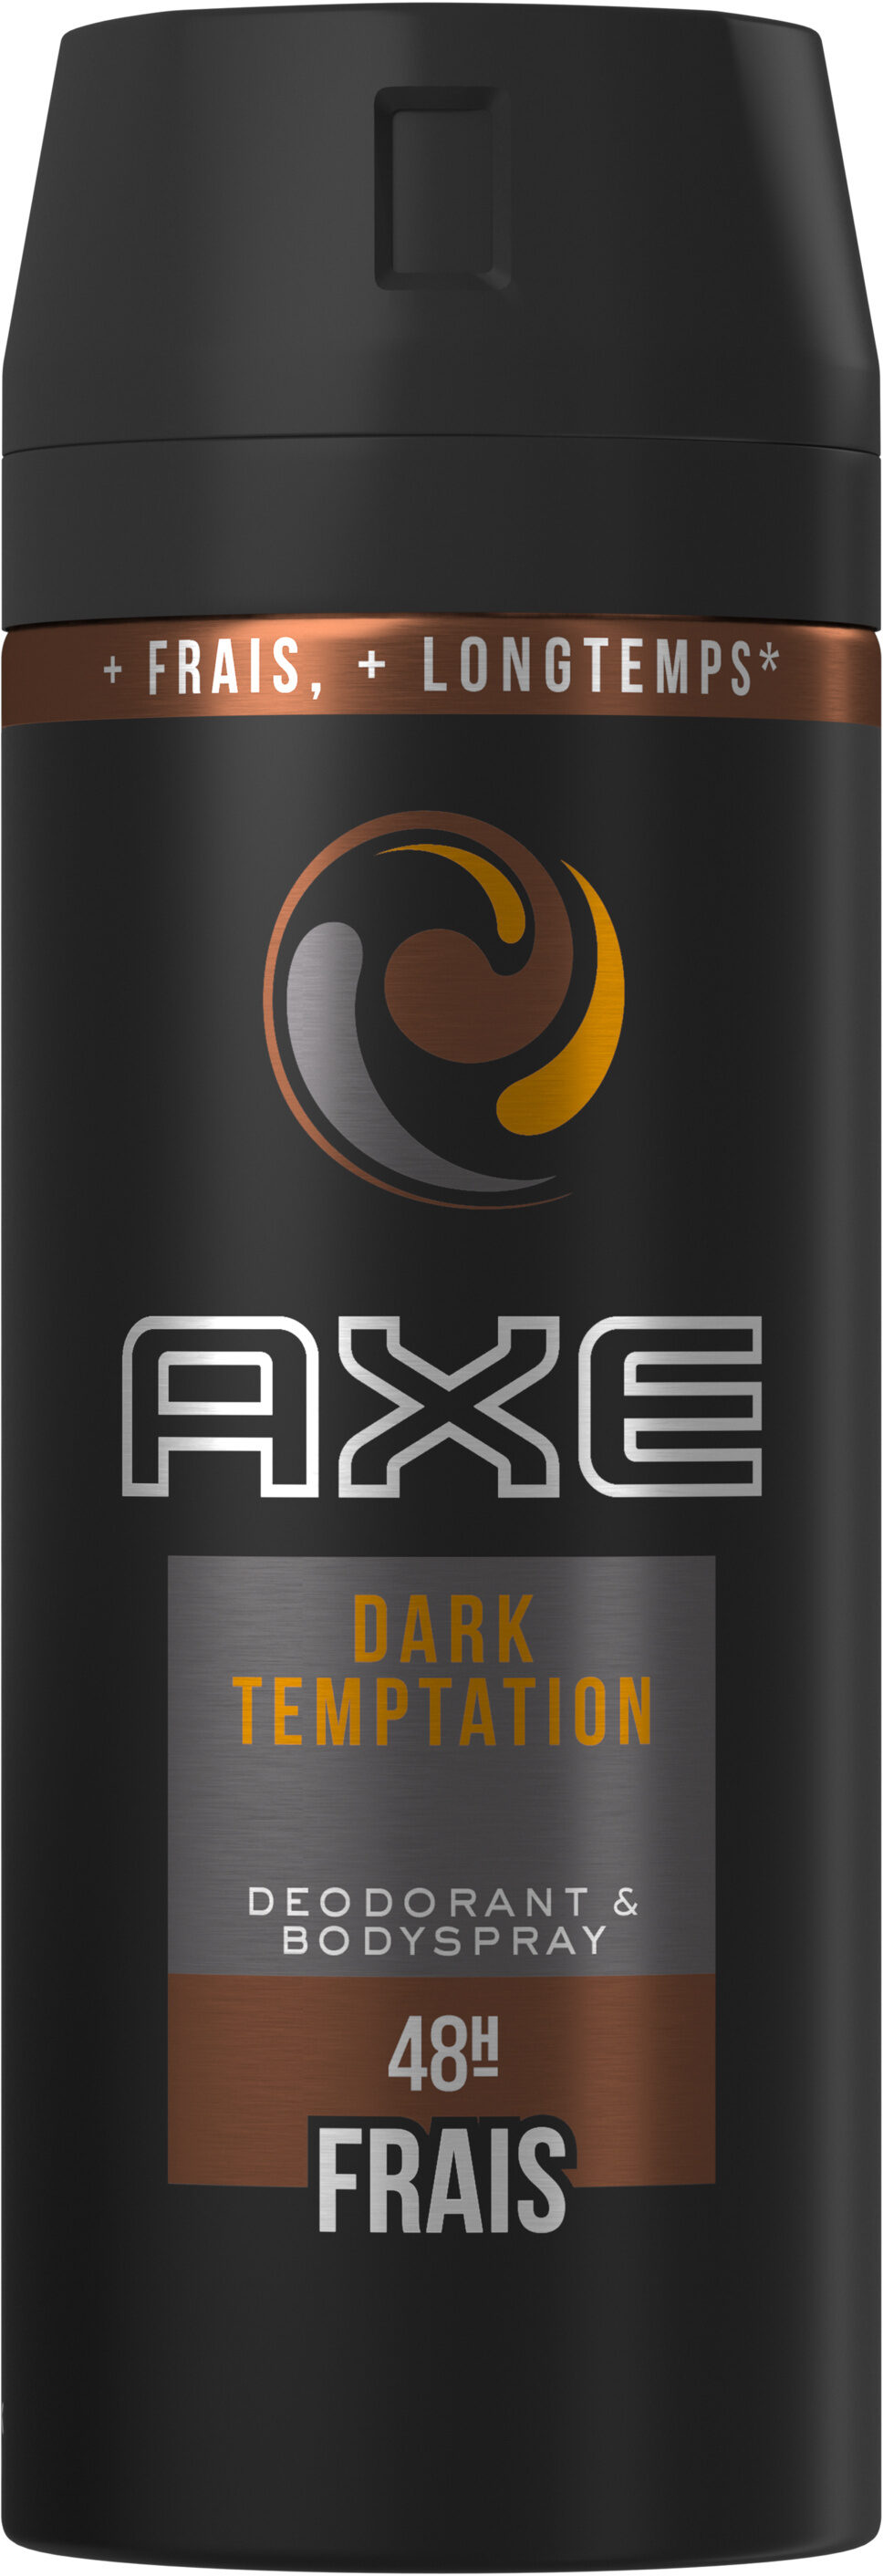 AXE Déodorant Bodyspray Homme Dark Temptation 48h Non-Stop Frais - Produit - fr